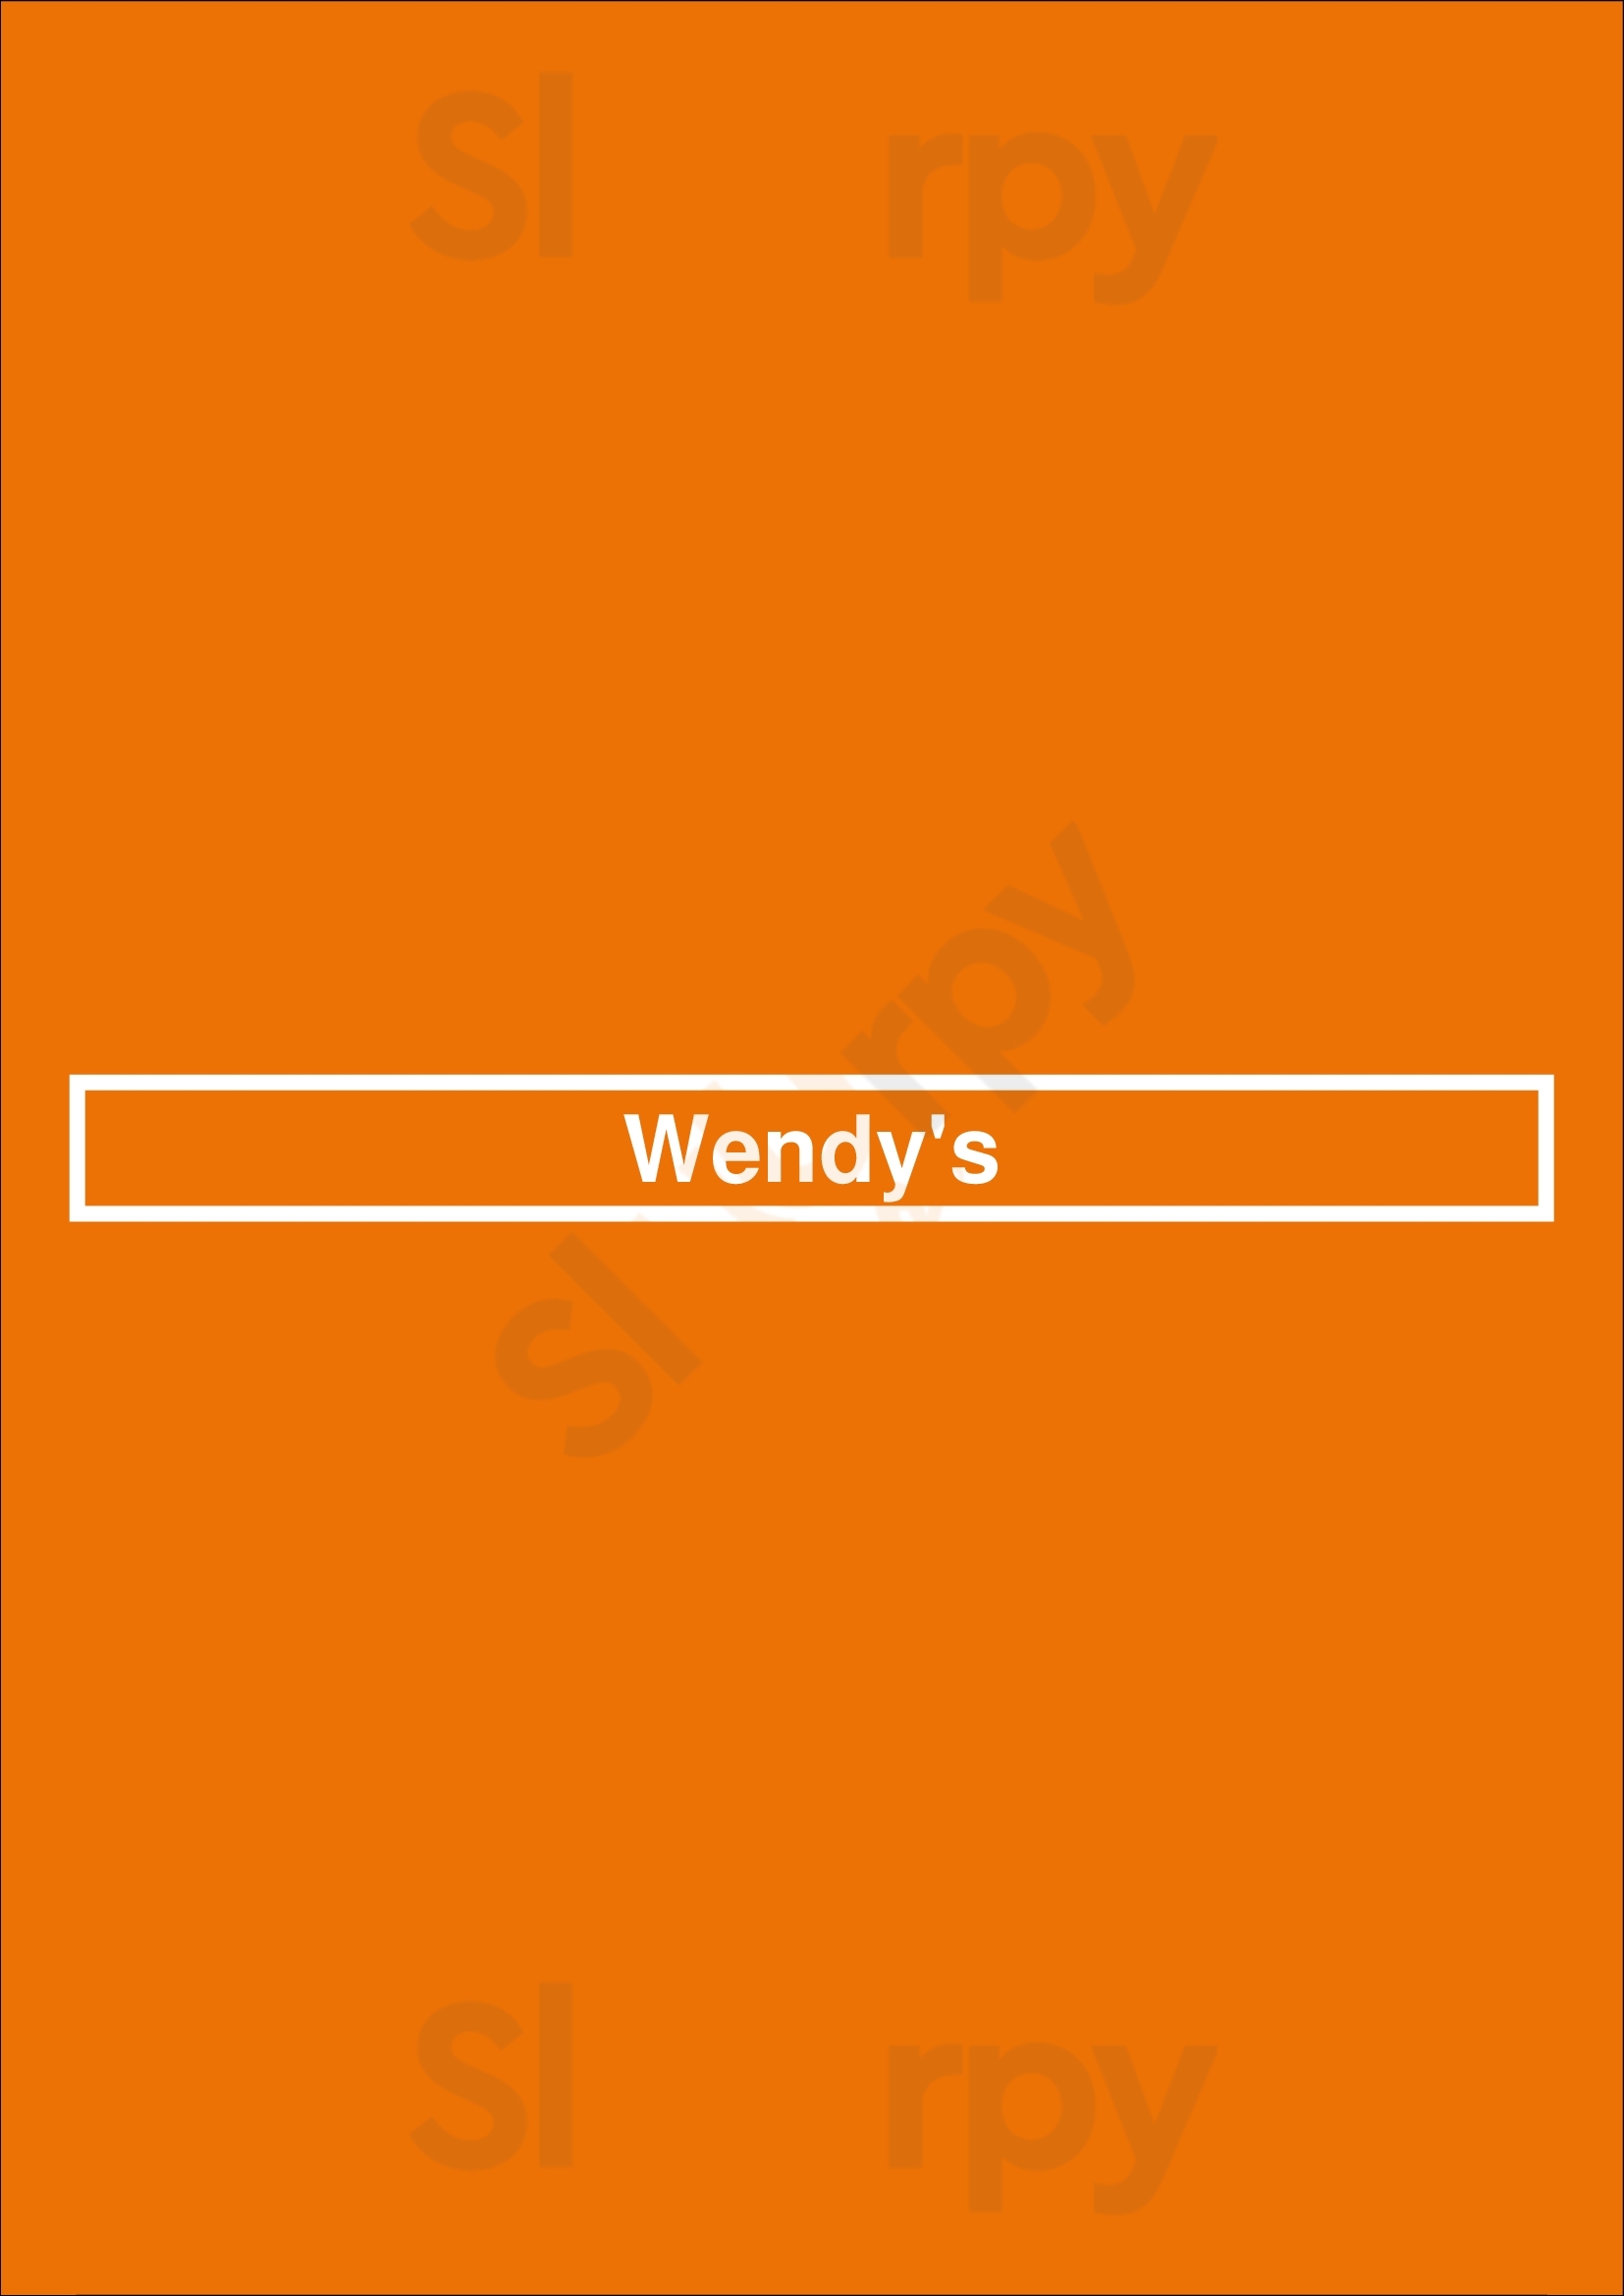 Wendy's Baton Rouge Menu - 1